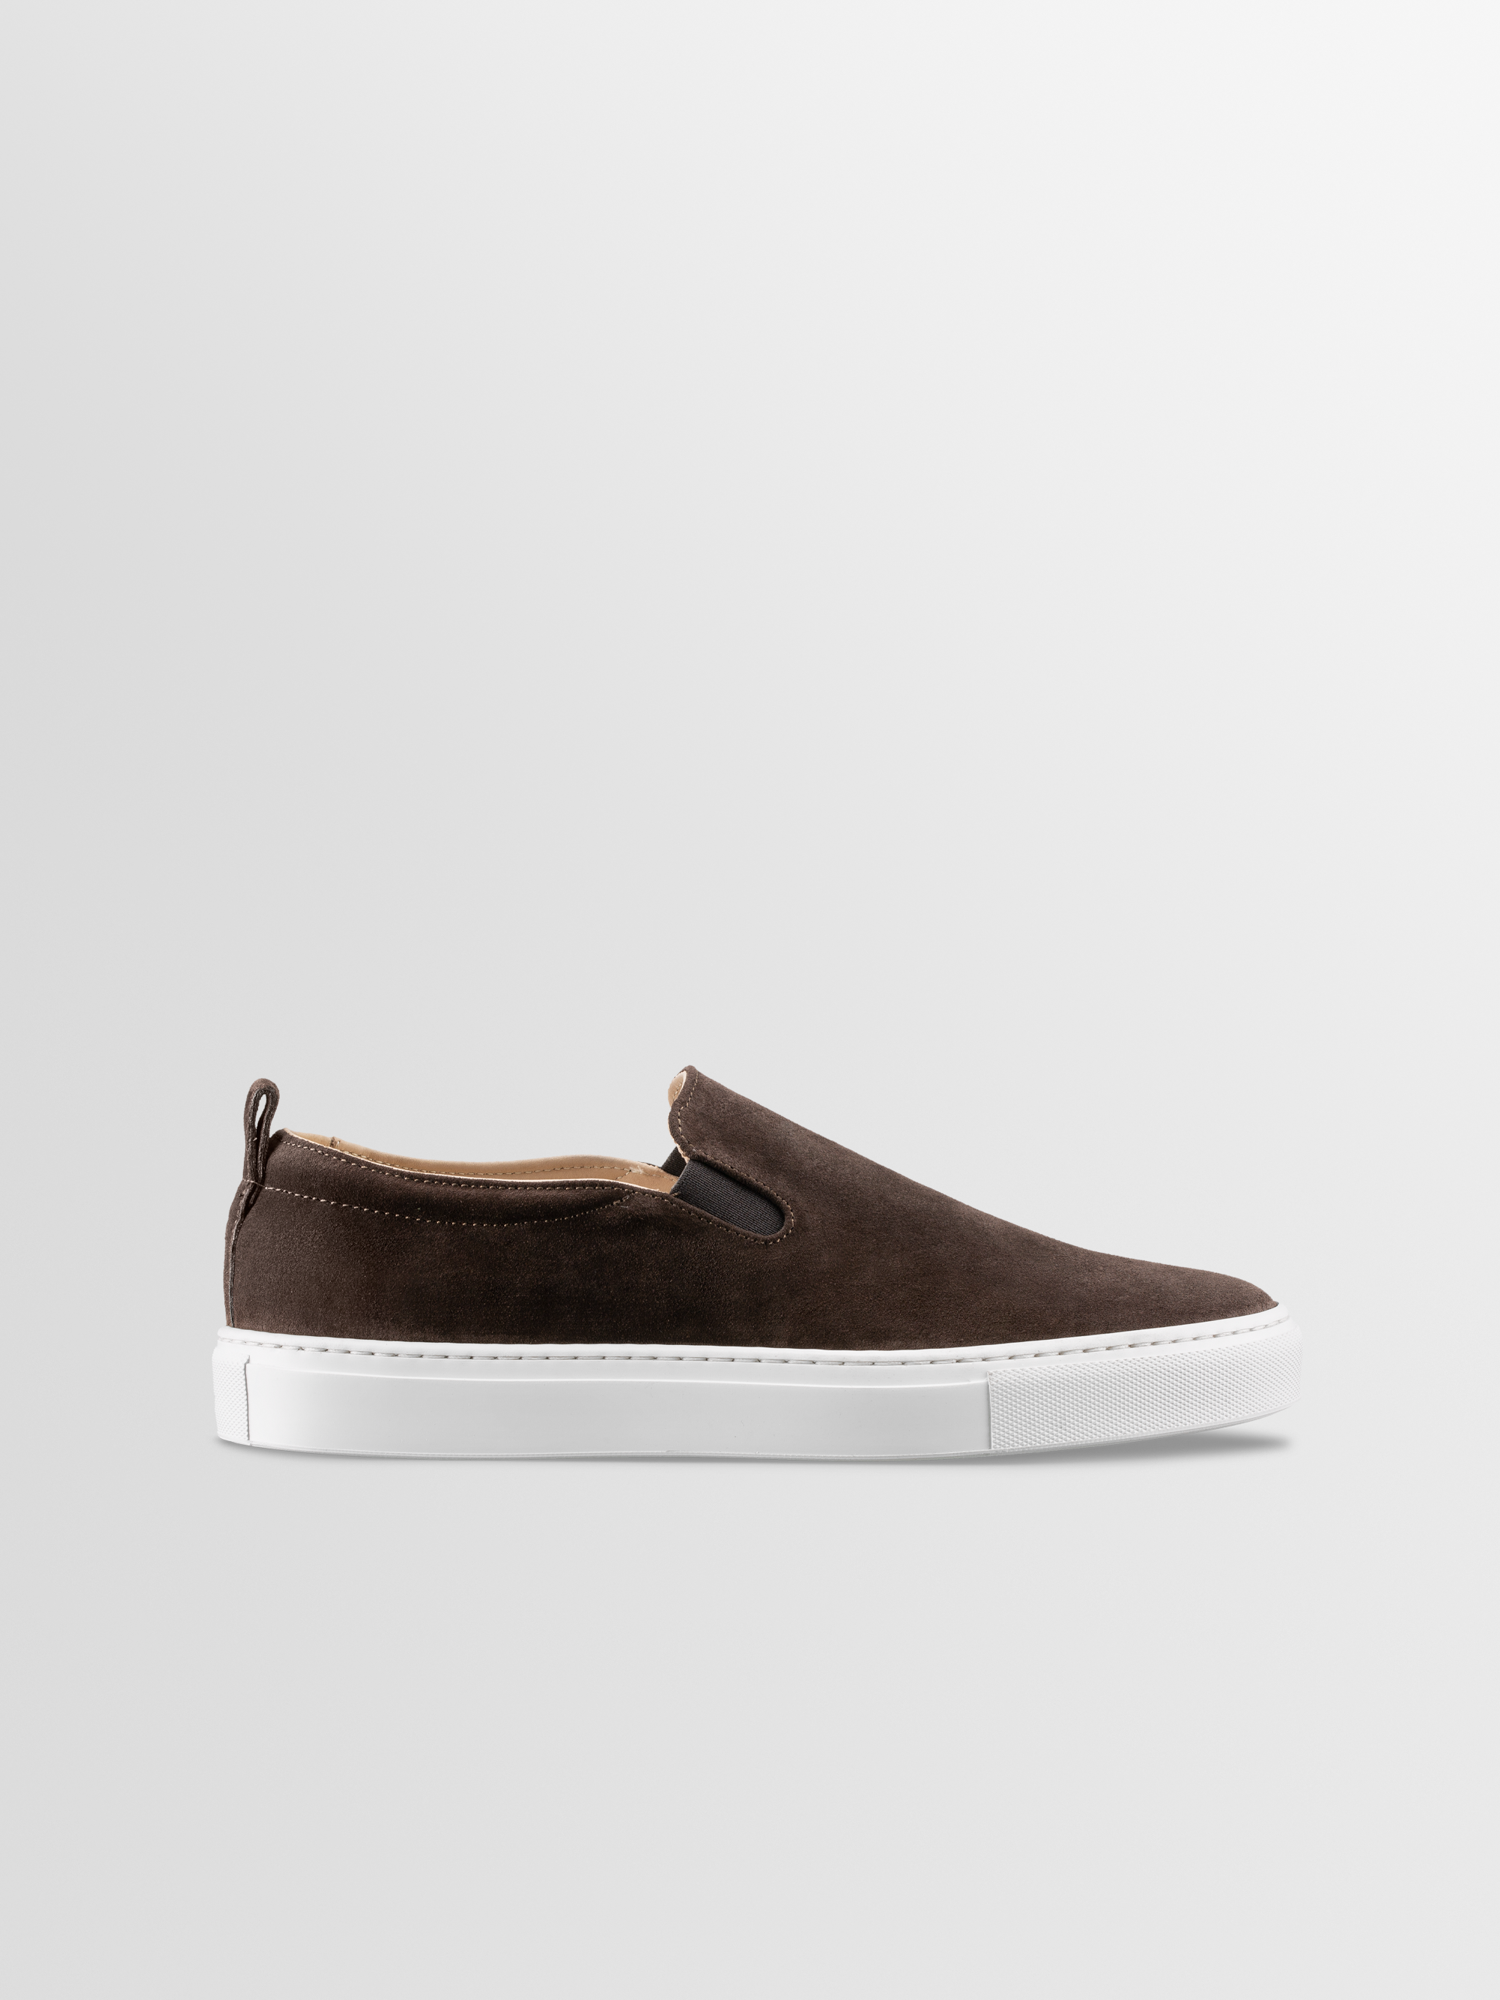 Men’s Brown Slip-on Suede Sneakers | Garda in Espresso | Koio – KOIO